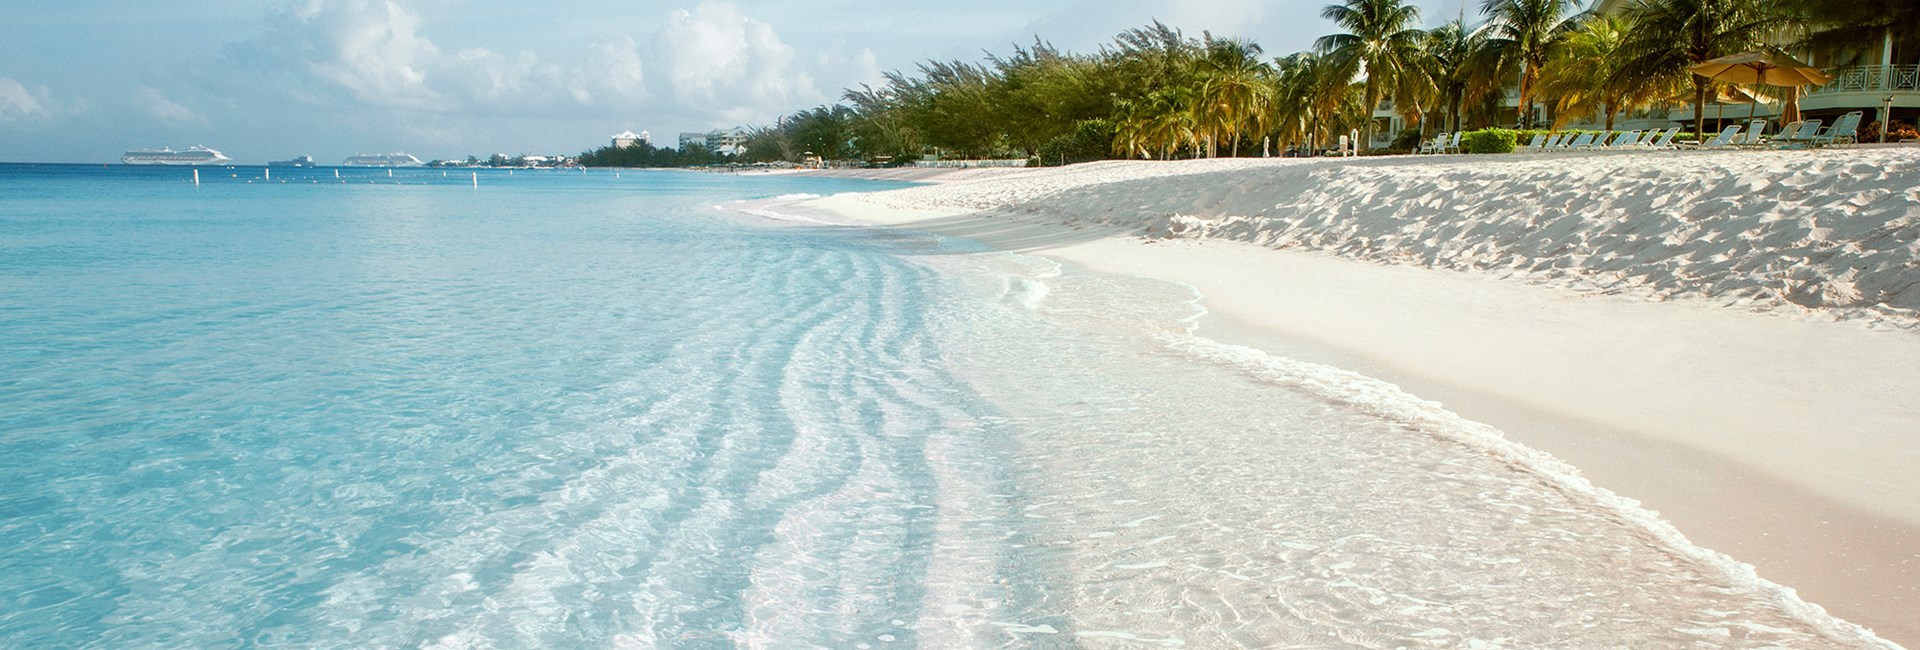 A stretch of white sand tropical beach with clear calm sea - Seven Mile Beach